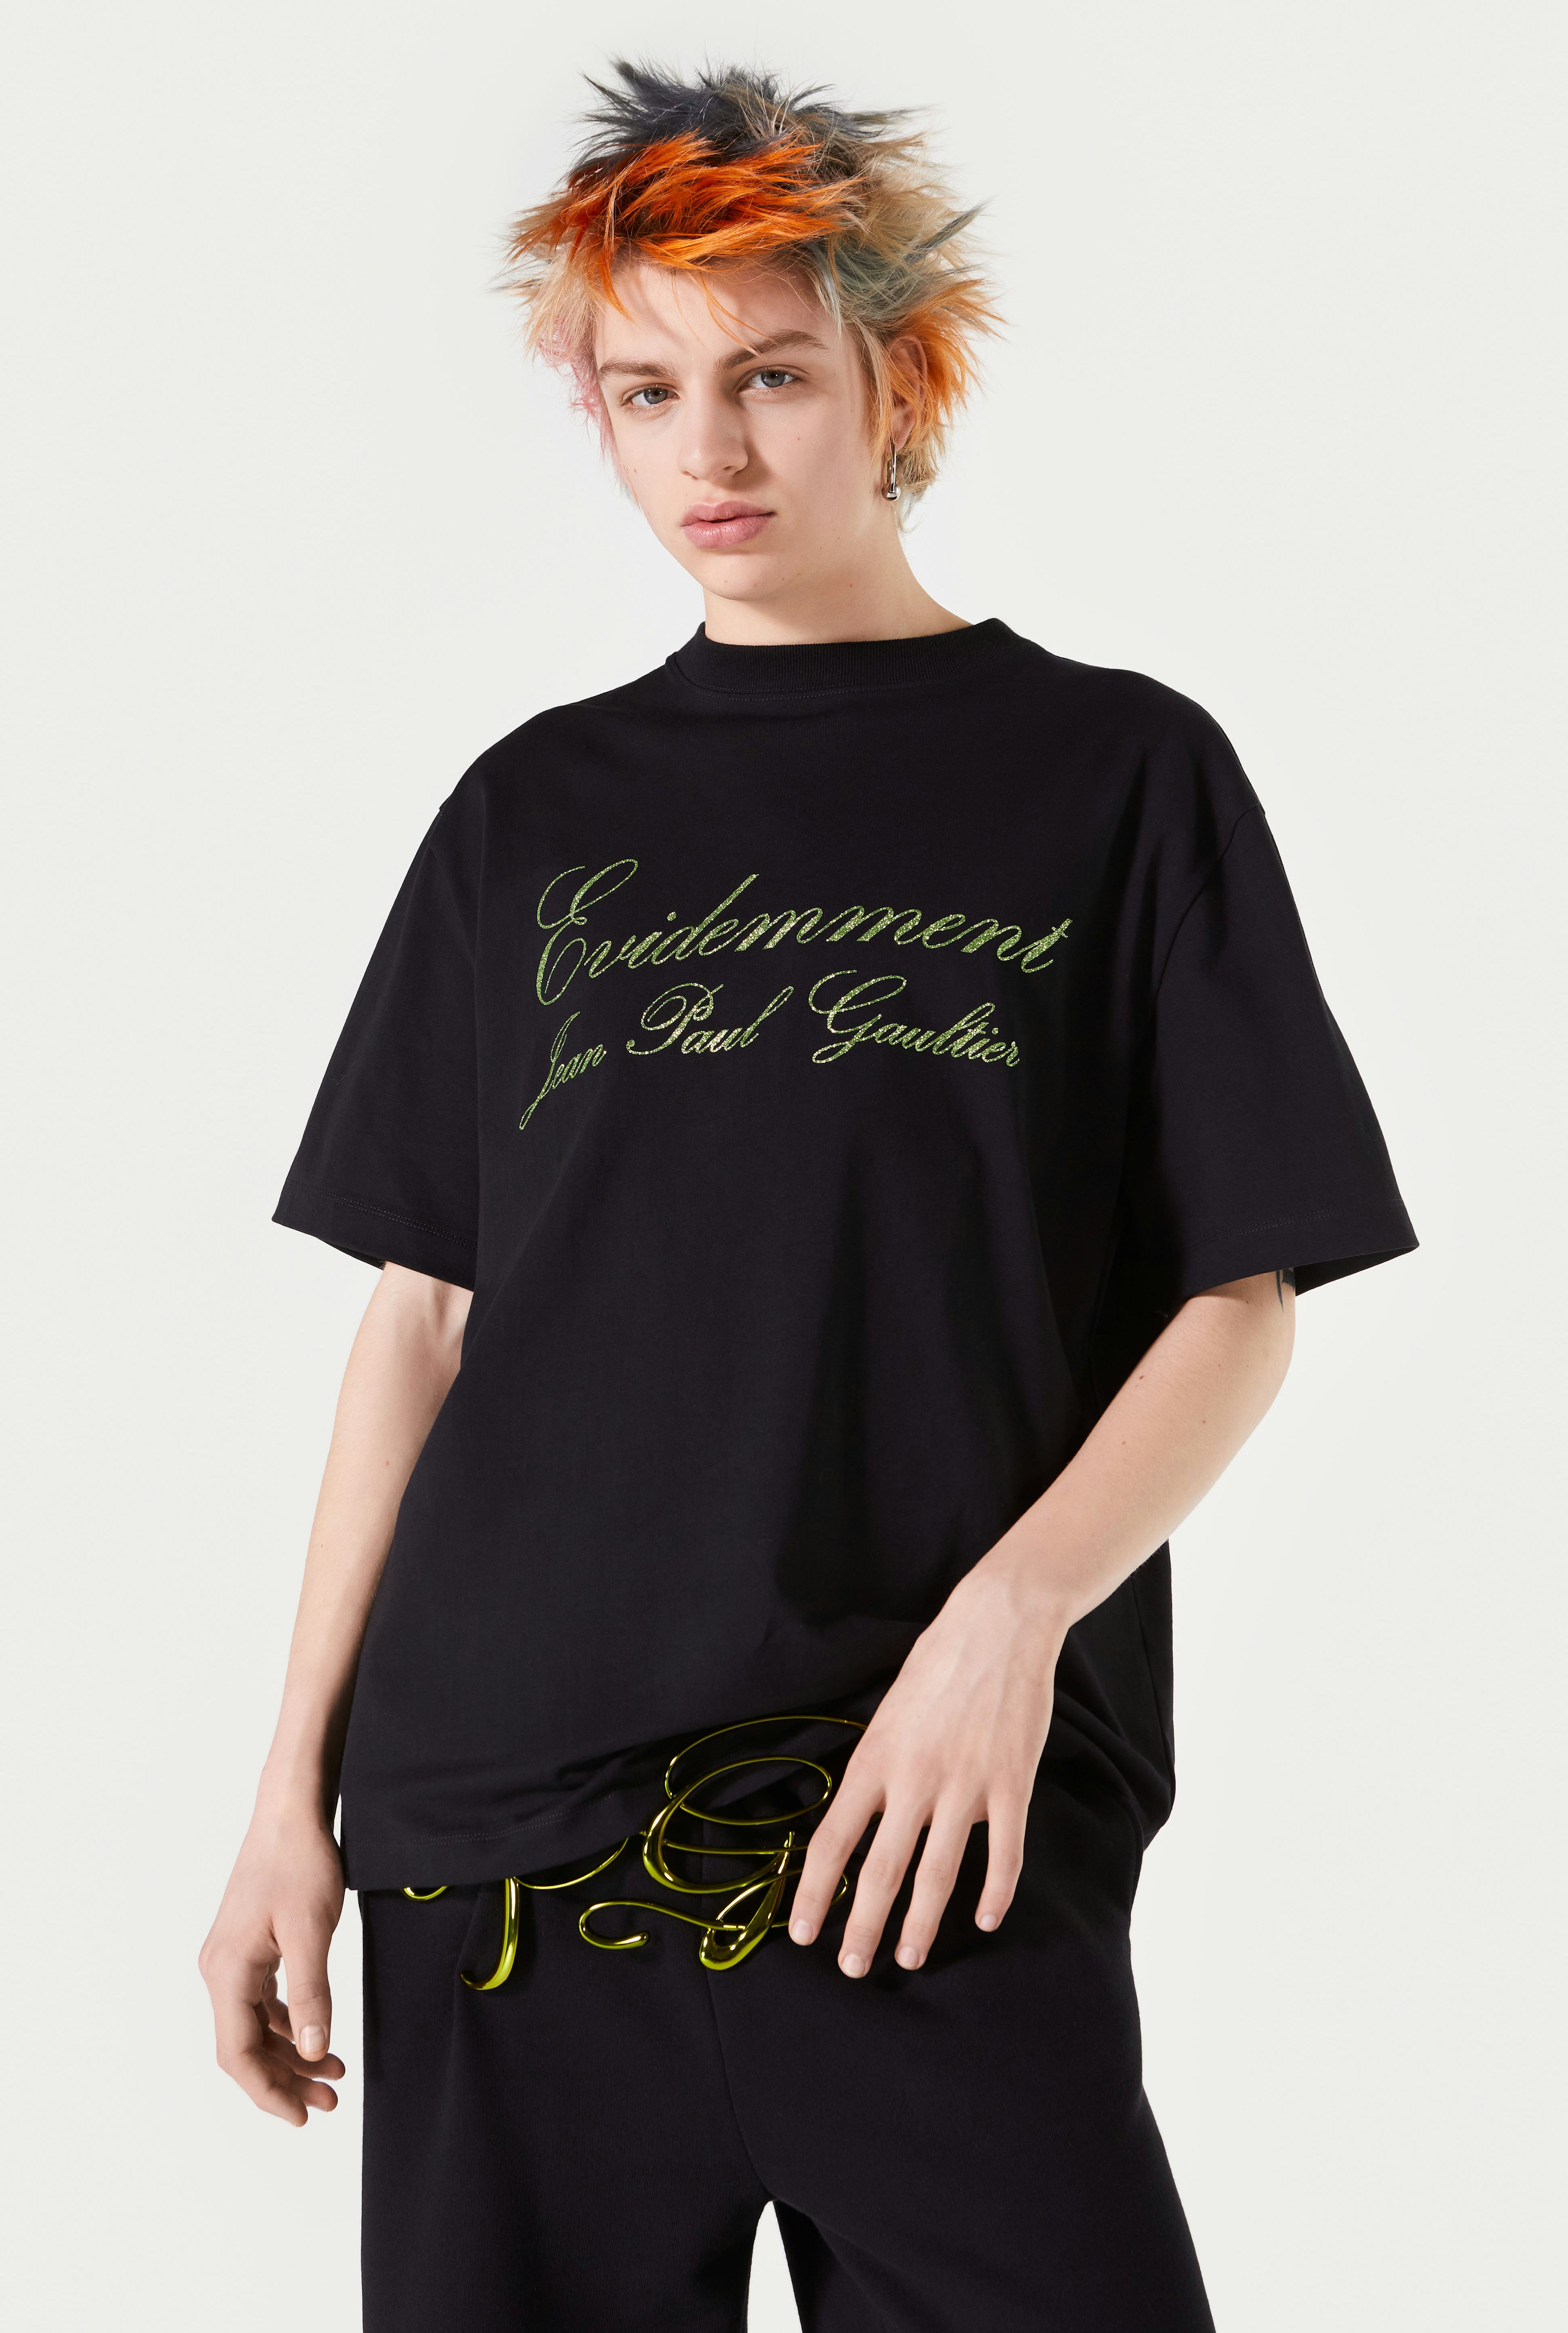 The Black Évidemment T-Shirt